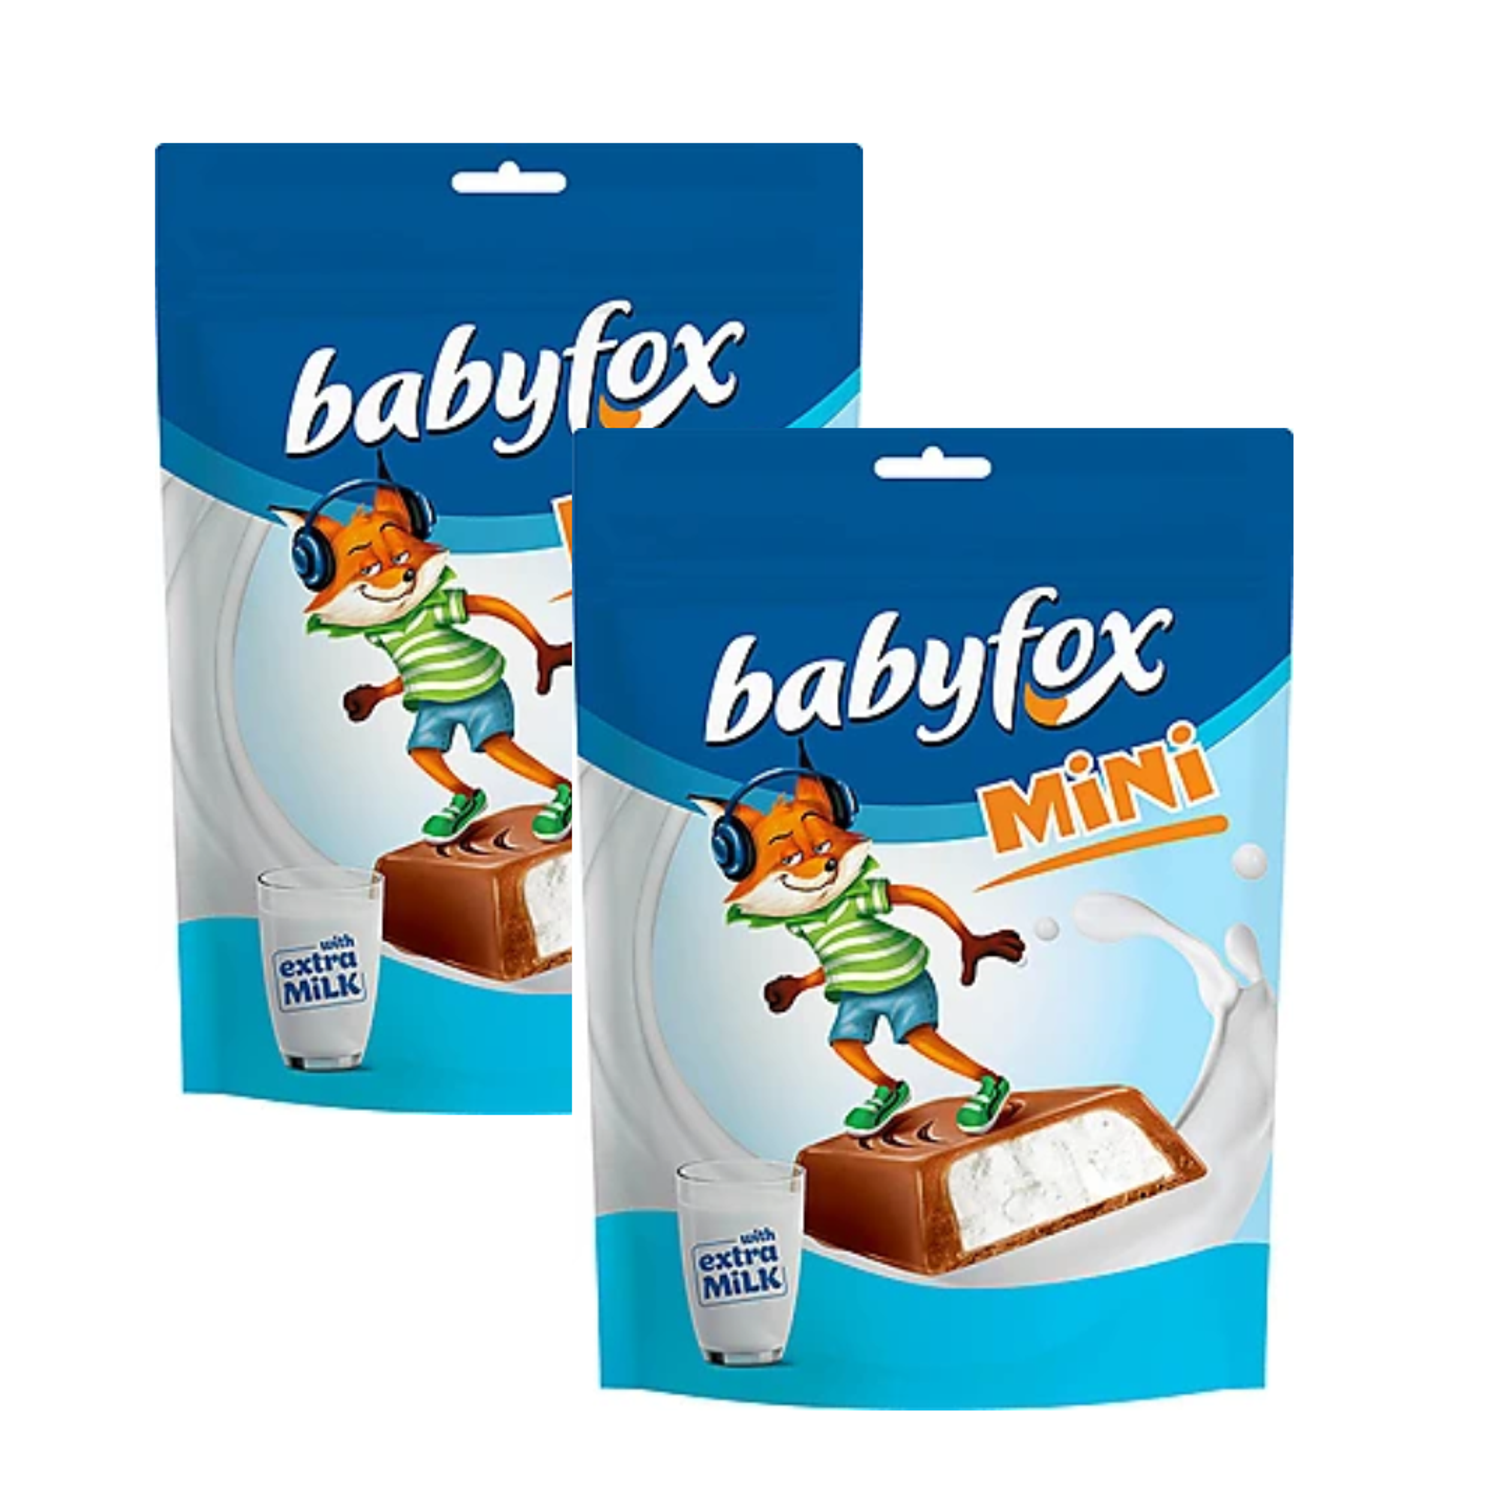 Kdv babyfox. «Babyfox», конфеты Mini с молочной начинкой, 120 г. Шоколадные конфеты Babyfox мини. Конфеты шоколадные Babyfox c молочной начинкой 120 г. KDV Babyfox с молочной начинкой.